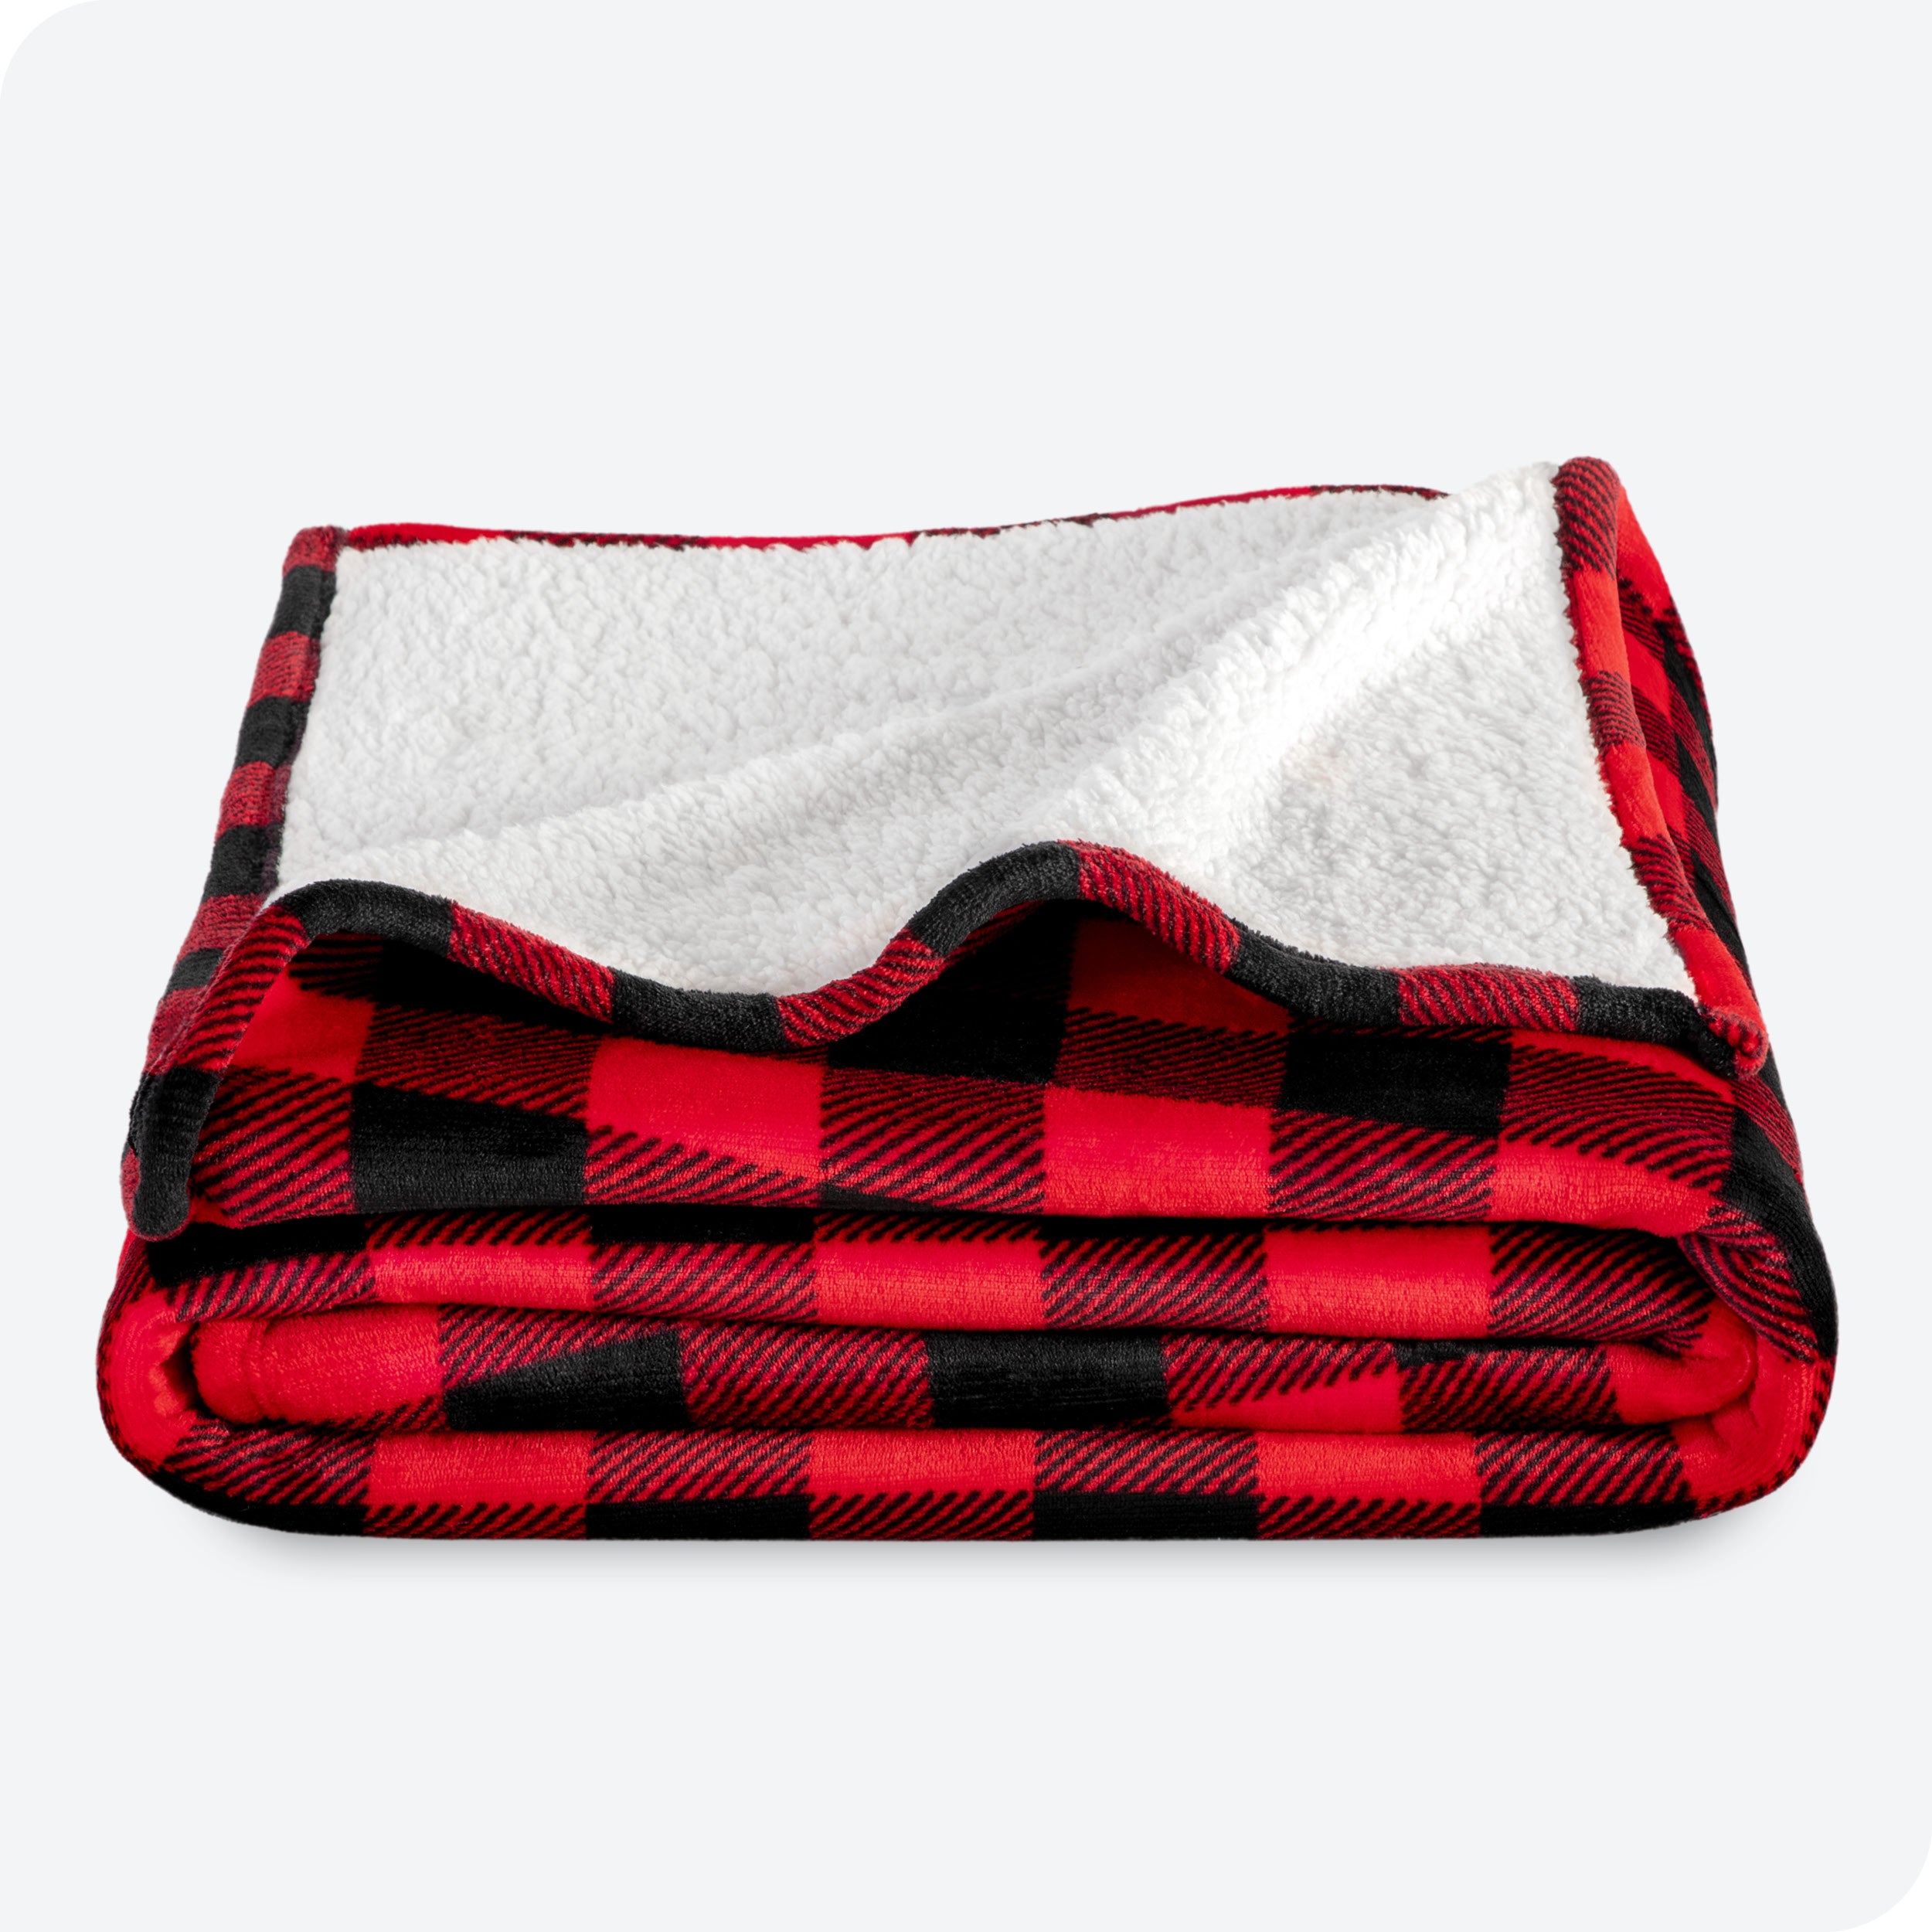 Buffalo Plaid Red Black Sherpa Blanket folded